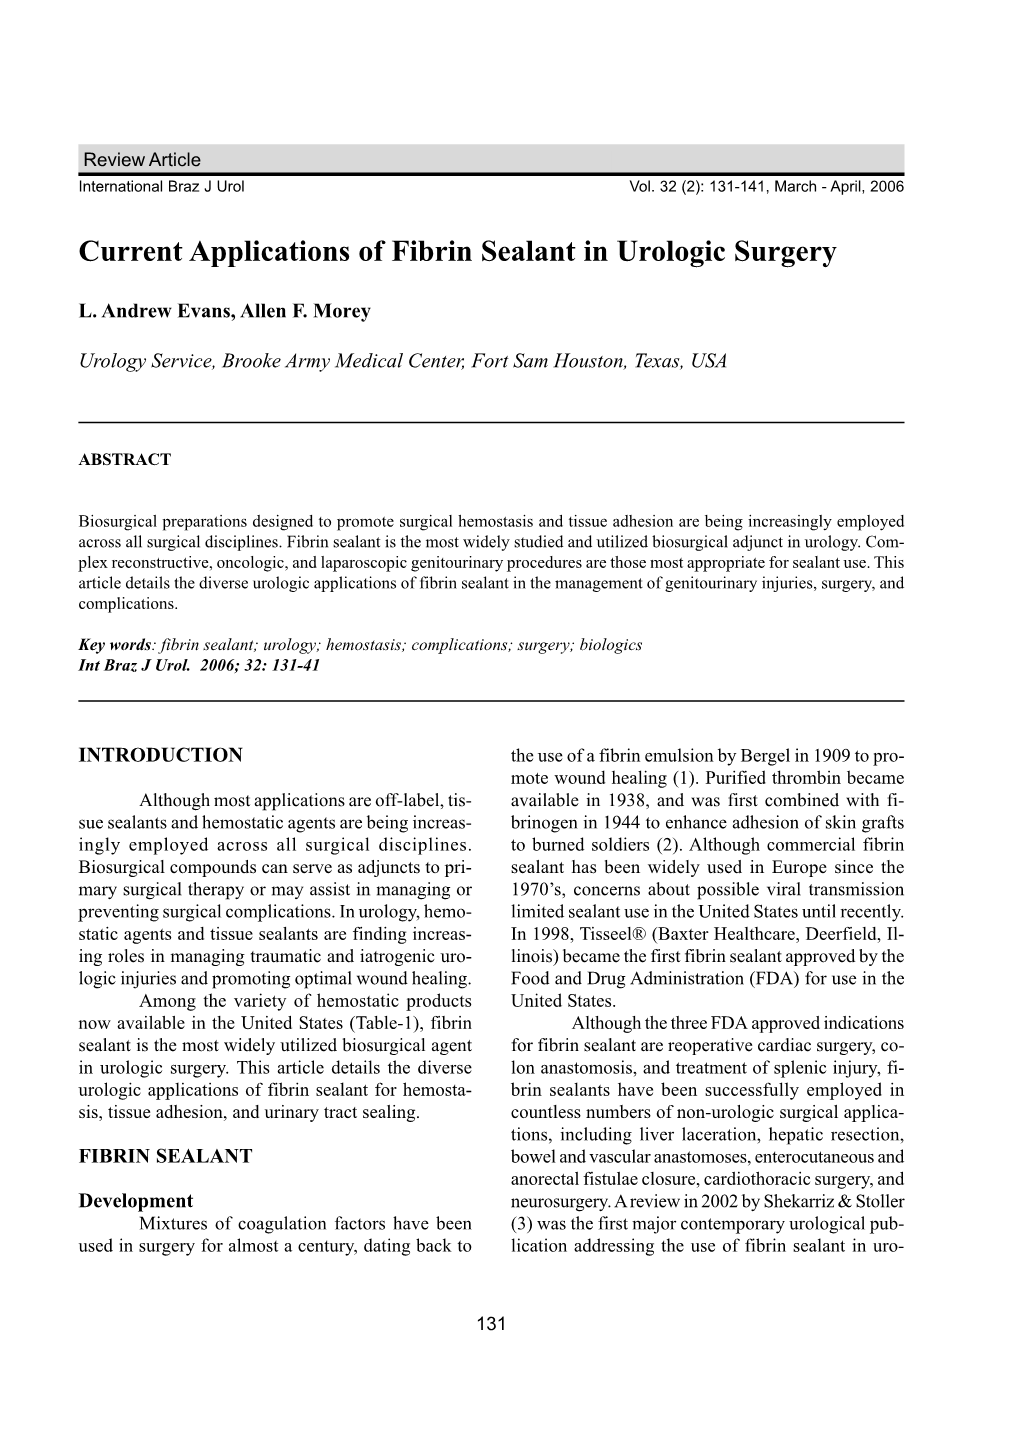 Current Applications of Fibrin Sealant in Urologic Surgery